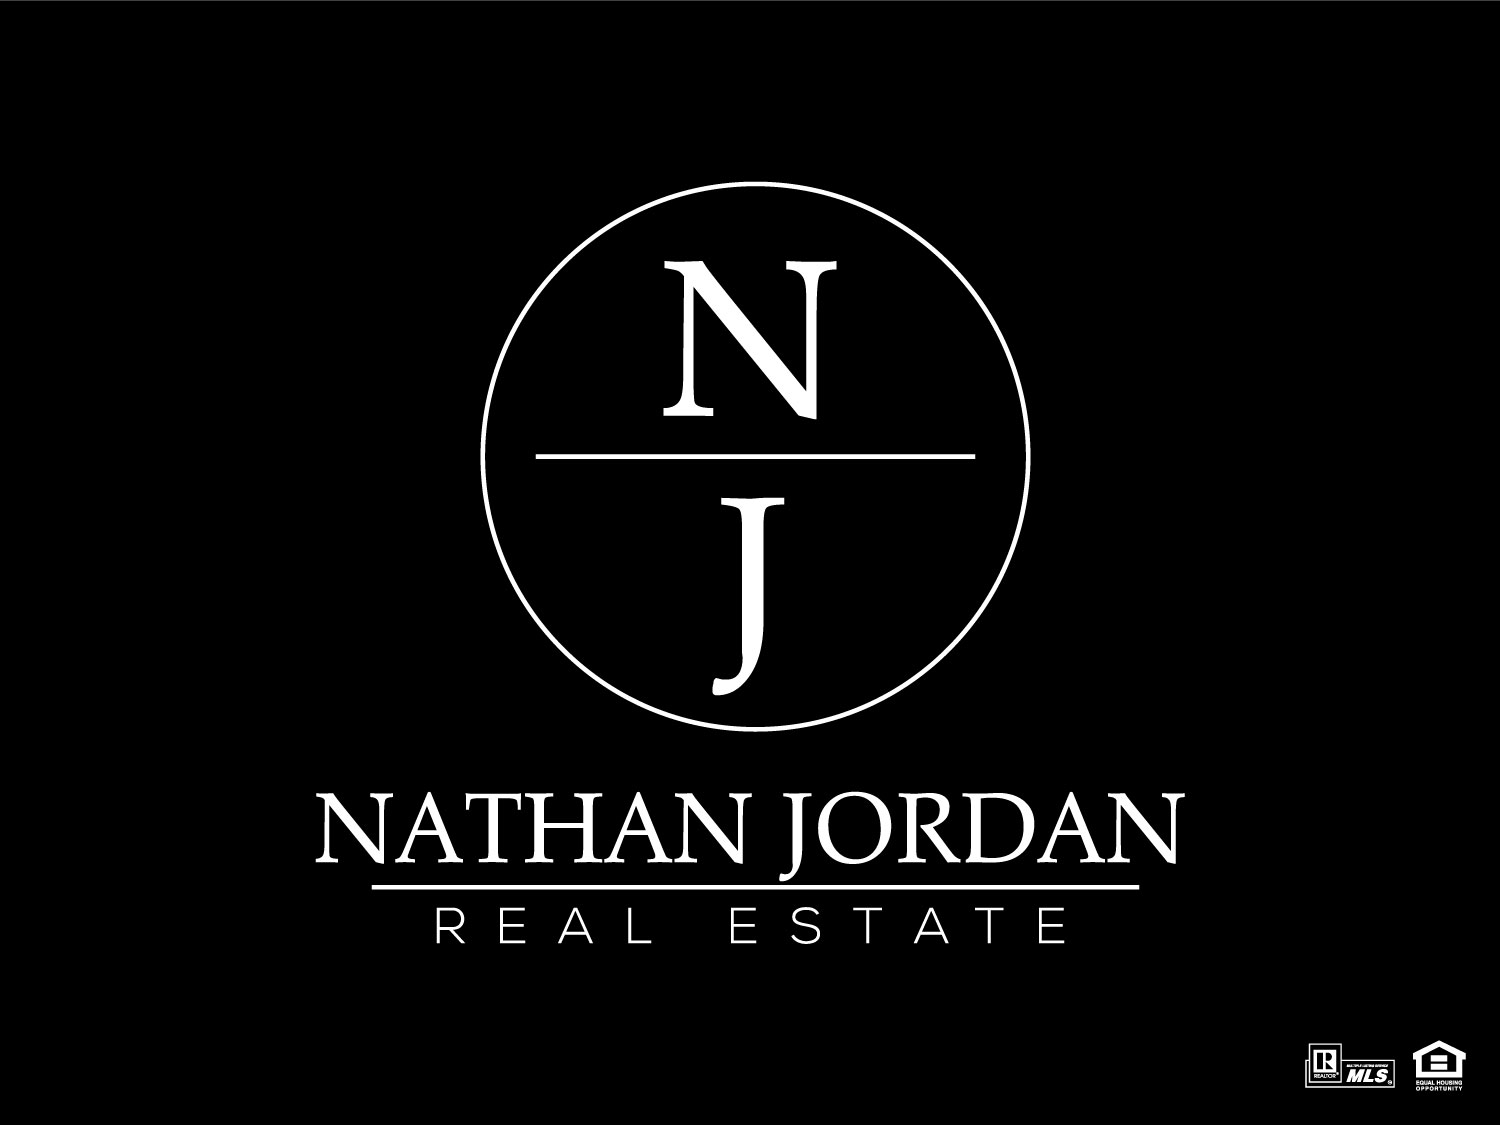 Nathan Jordan Real Estate